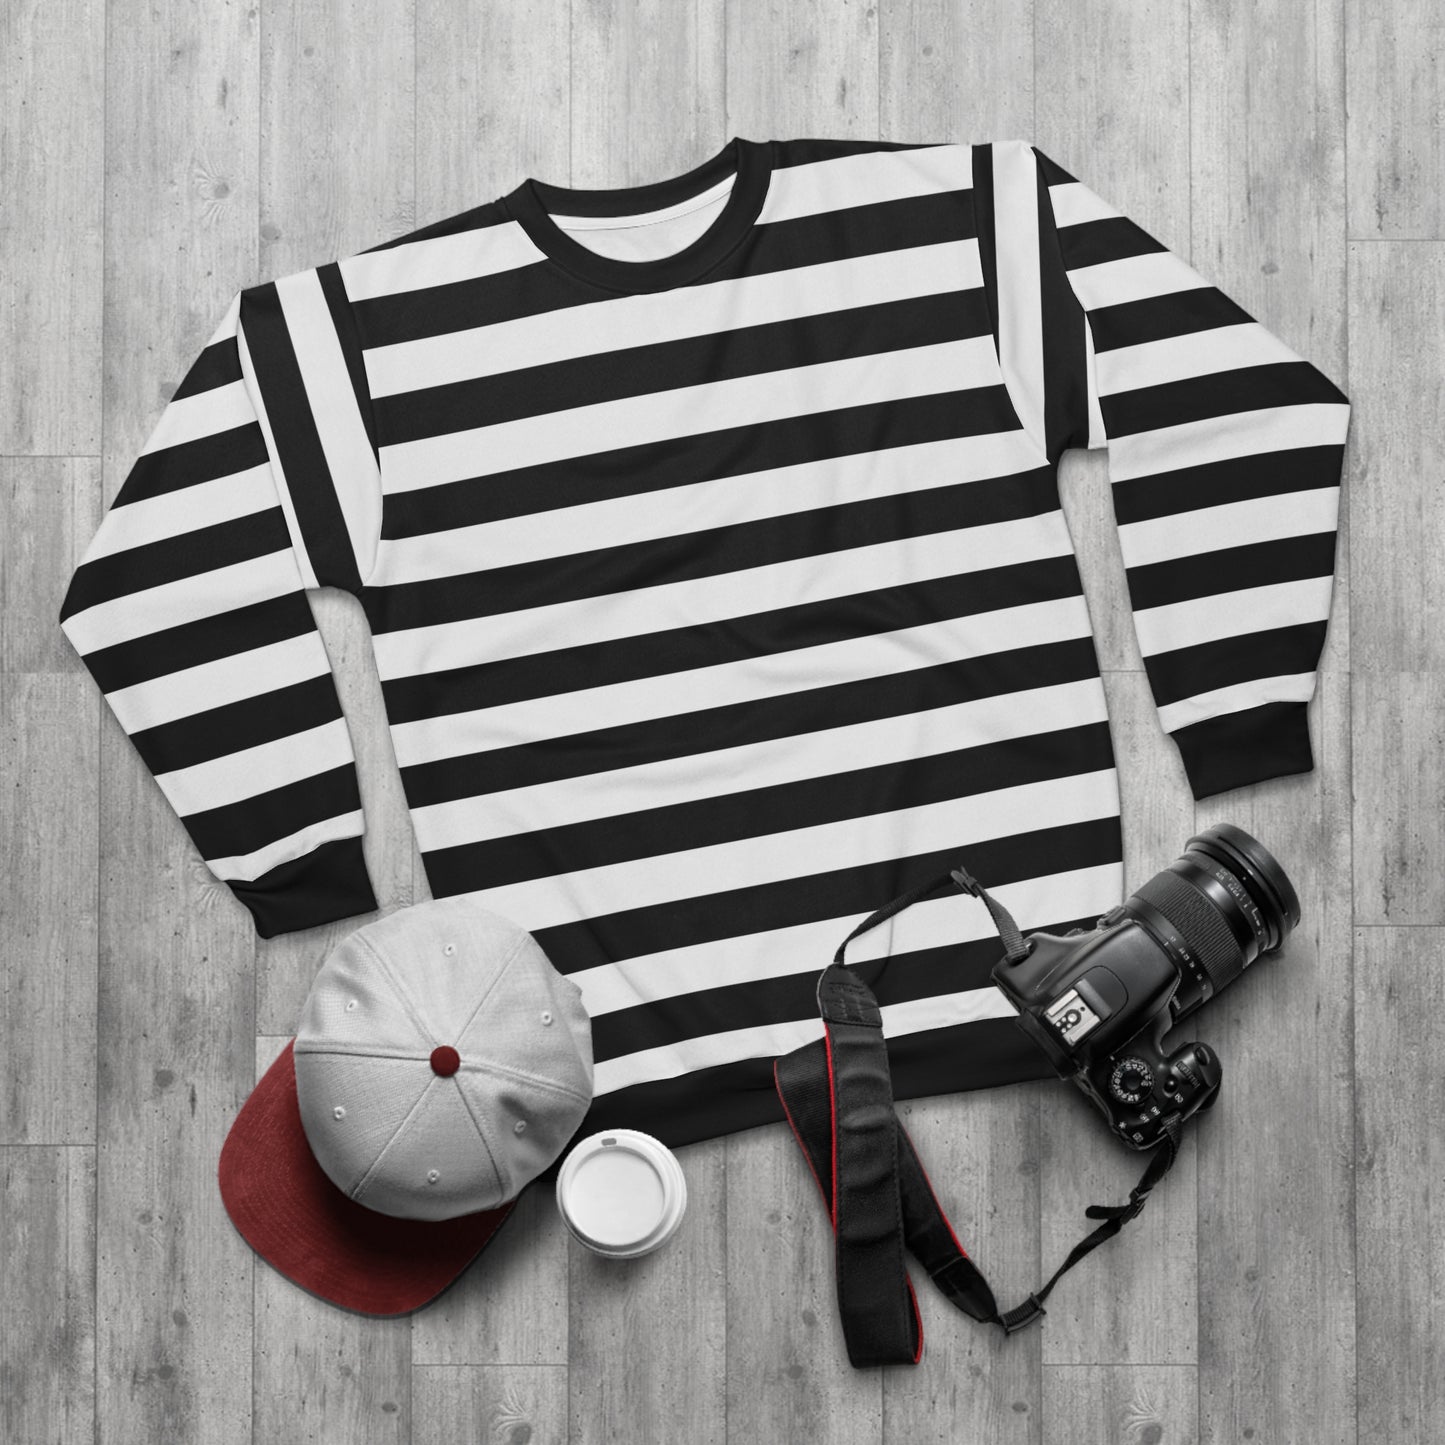 Black and White Striped Sweatshirt, Graphic Crewneck Fleece Cotton Sweater Jumper Pullover Men Women Adult Aesthetic Designer Top